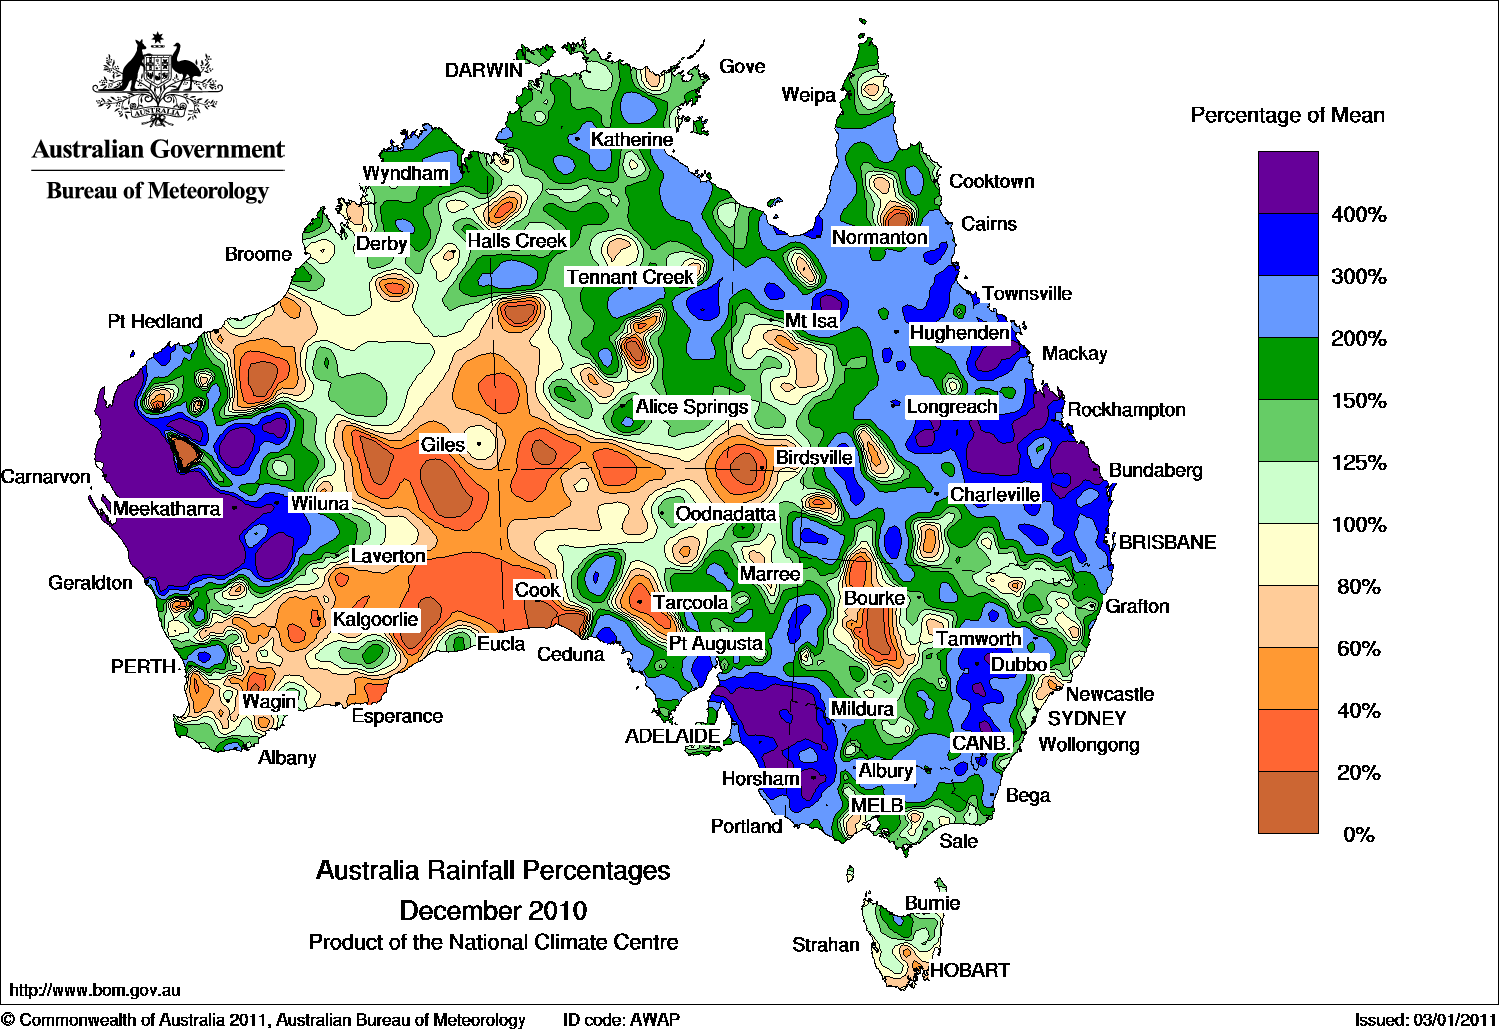 Australia rainfall percentages for December 2010